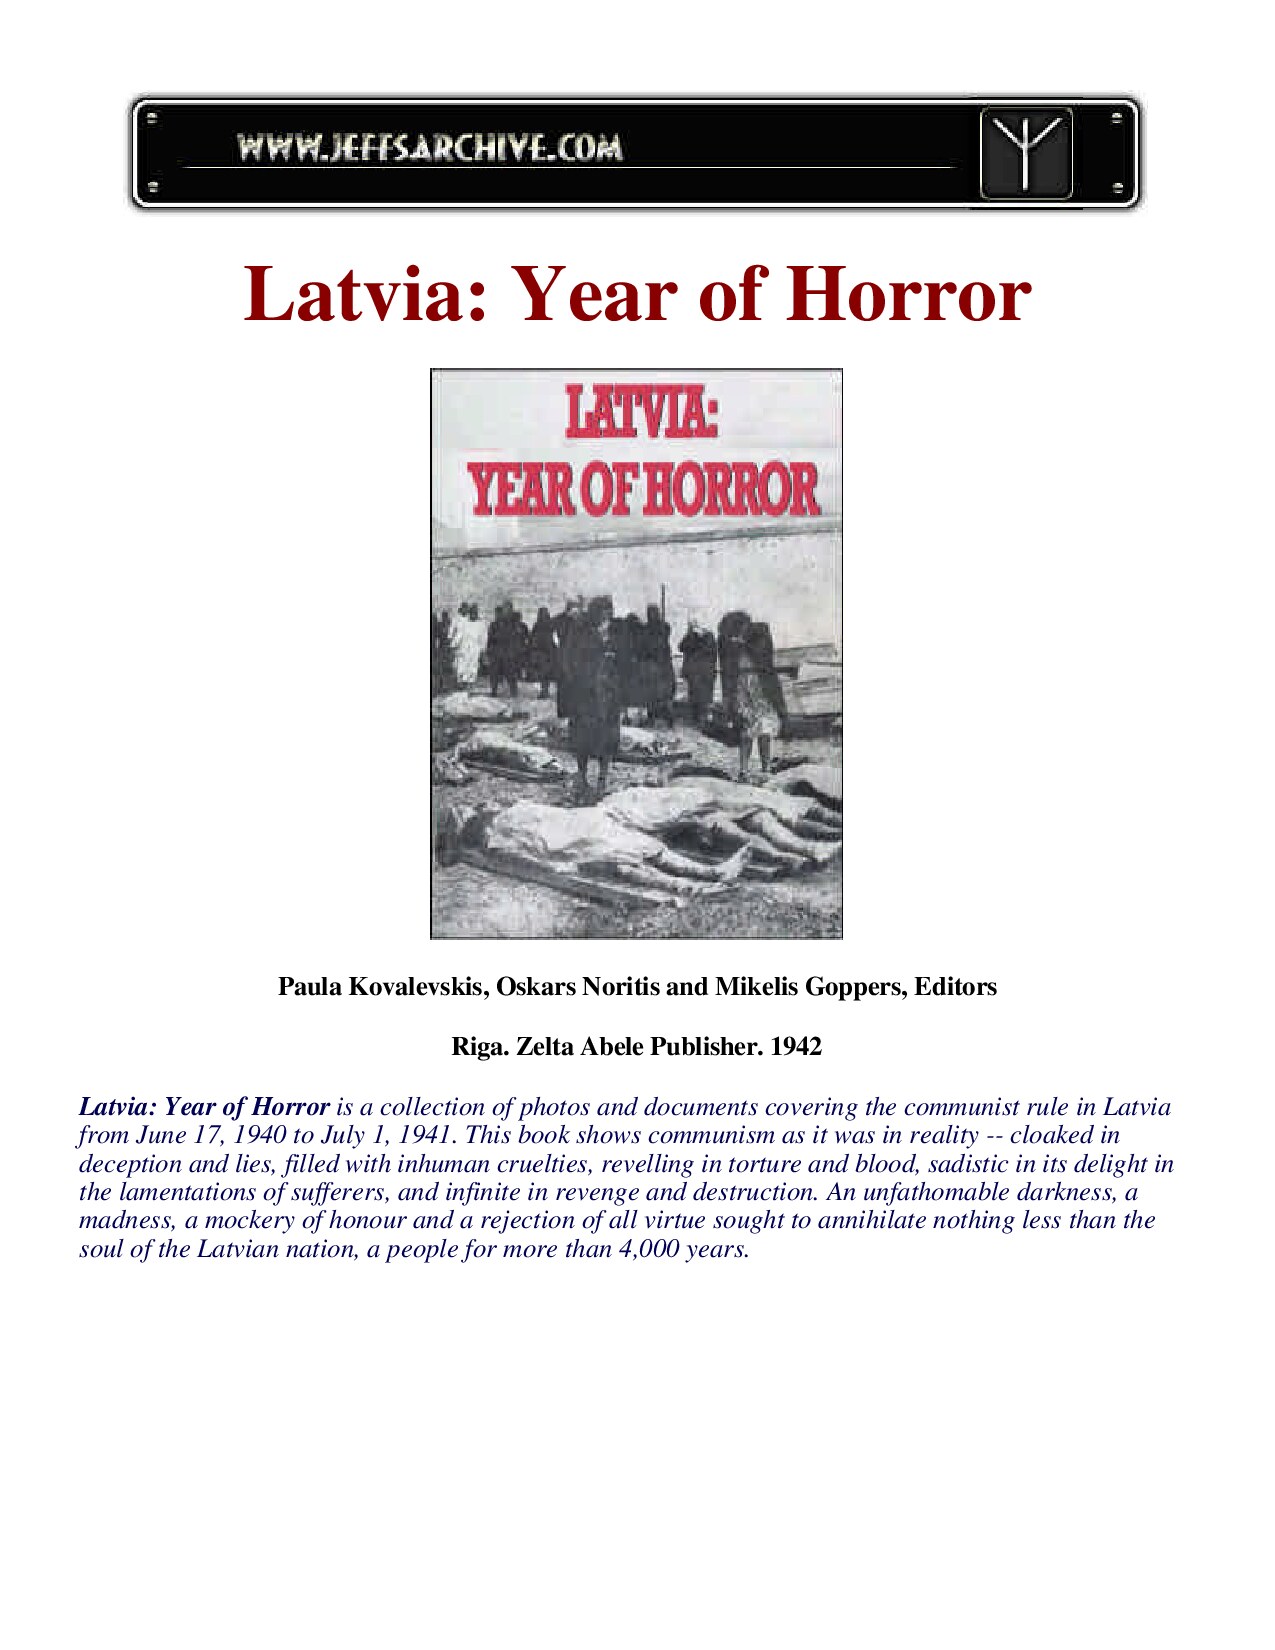 Kovalevskis, Paula; Latvia- Year of Horror